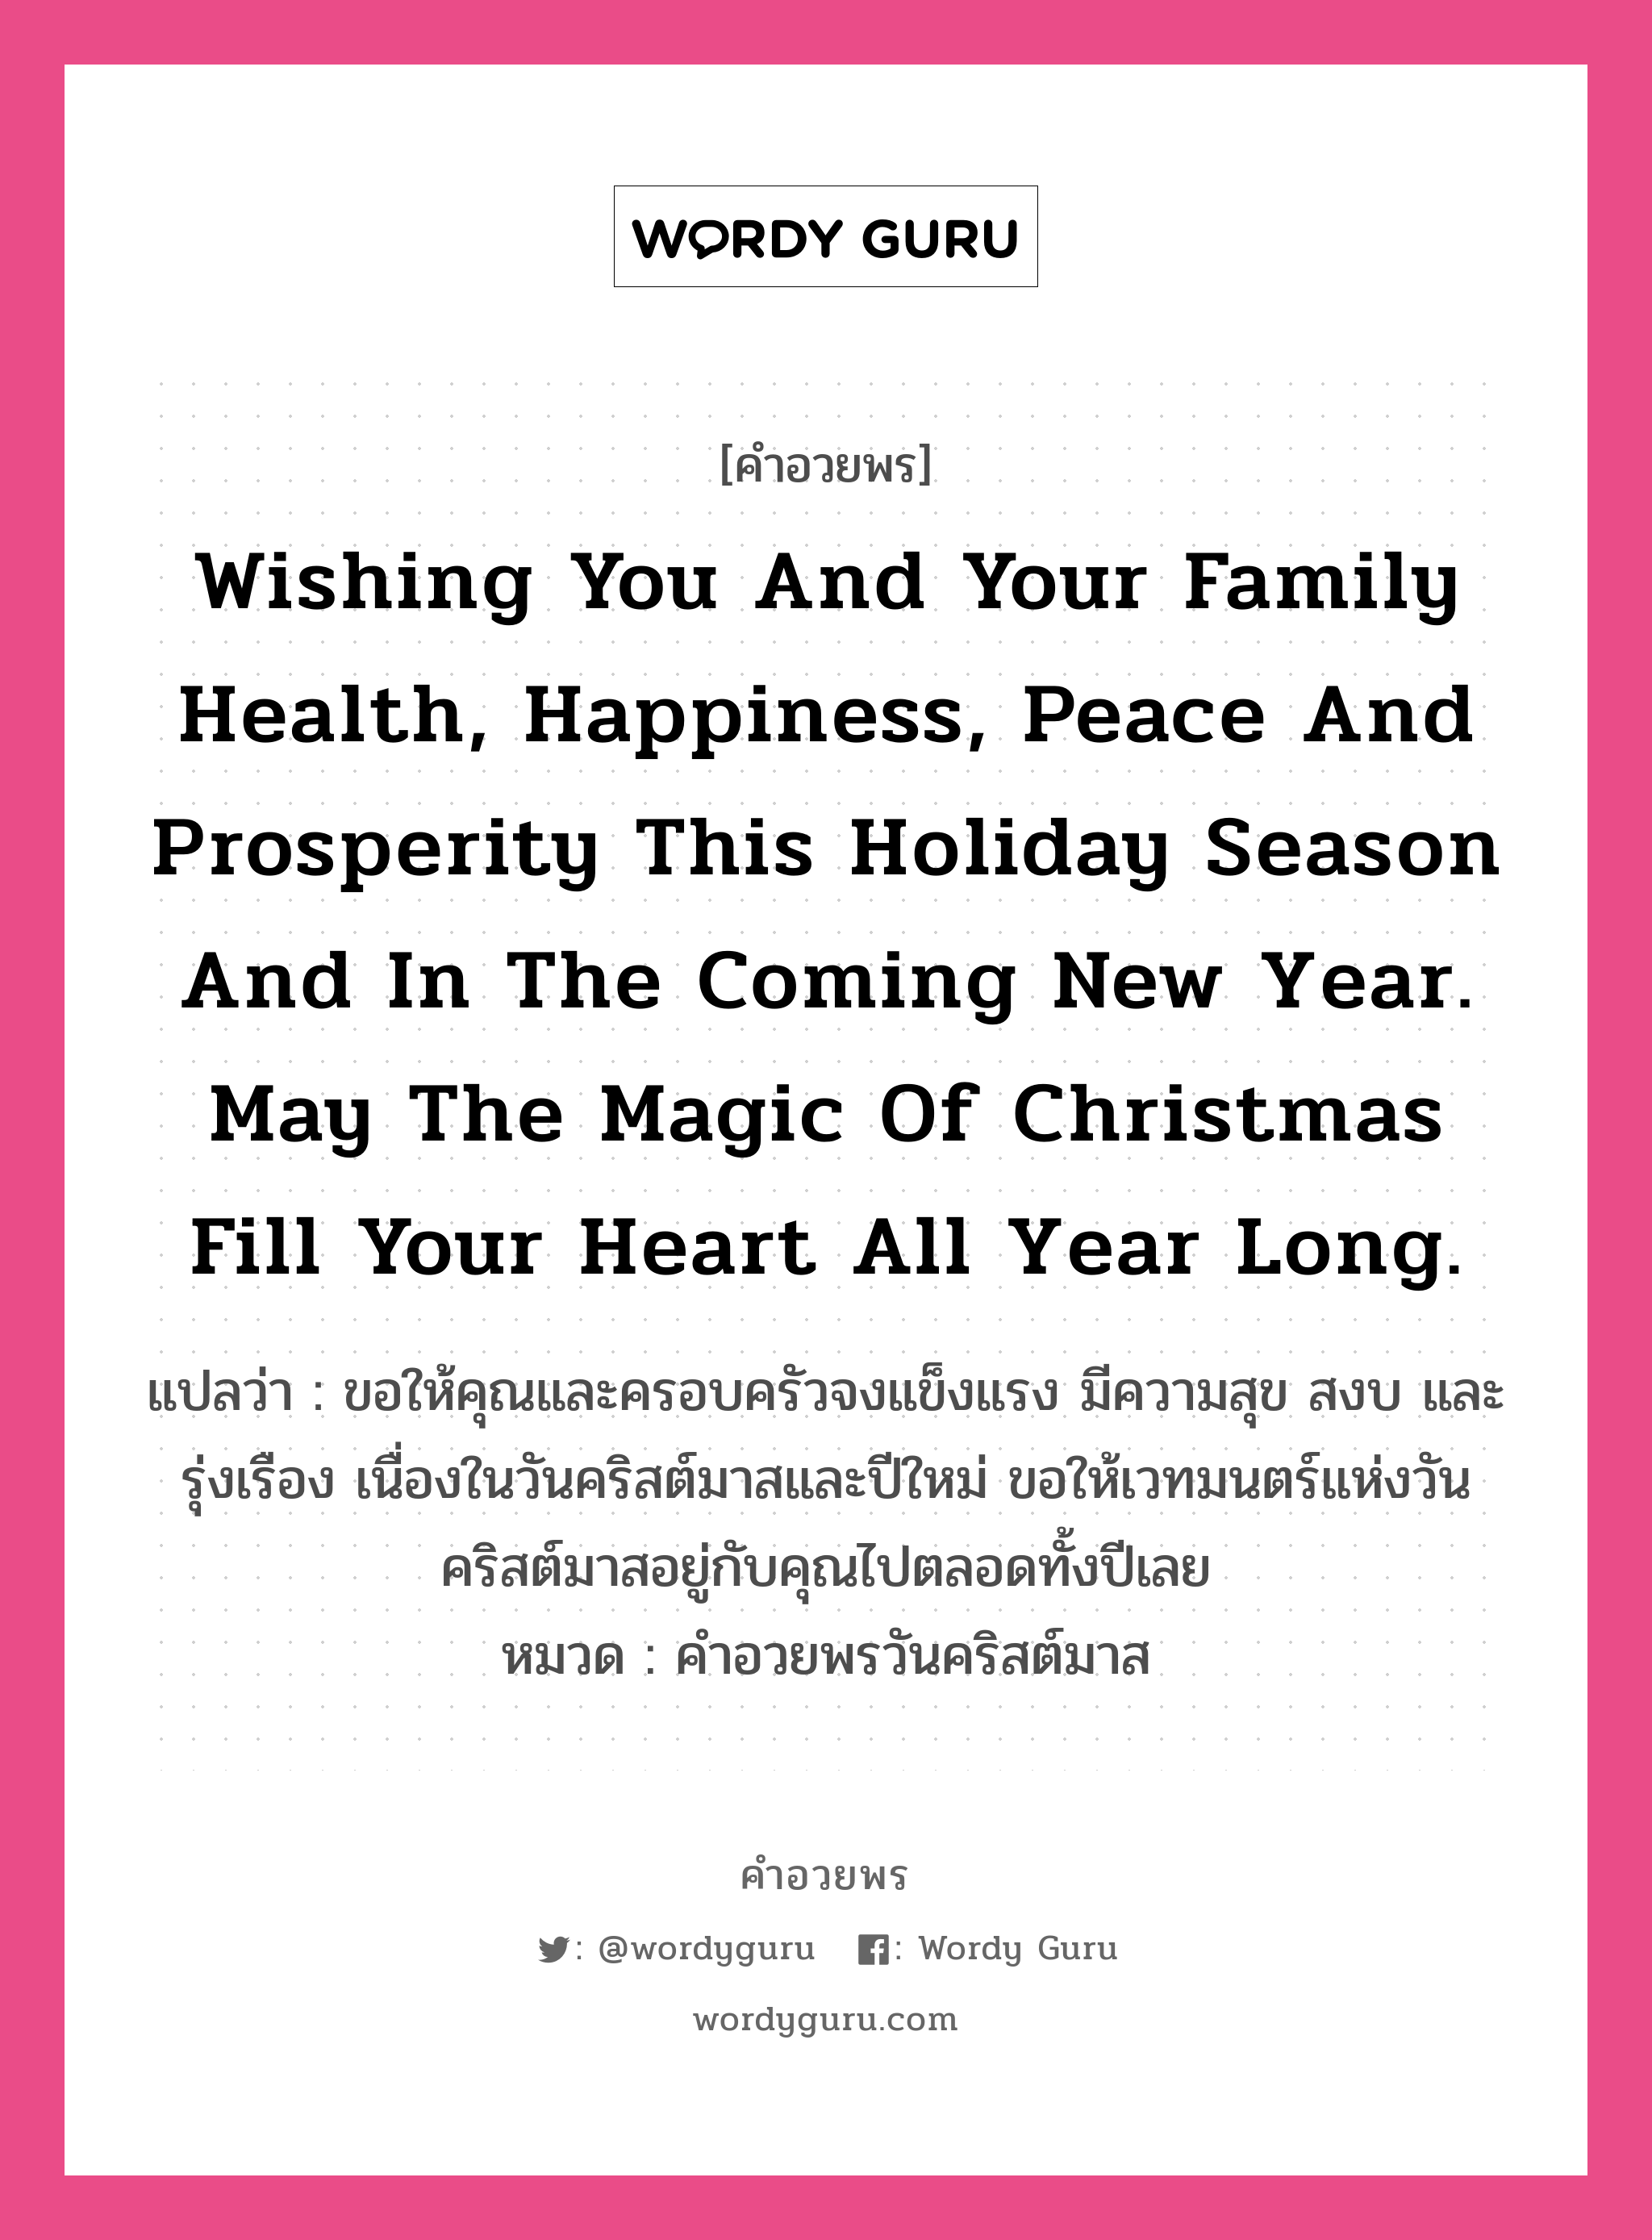 Wishing you and your family health, happiness, peace and prosperity this holiday season and in the coming New Year. May the magic of Christmas fill your heart all year long. คำศัพท์ในกลุ่มประเภท คำอวยพรวันคริสต์มาส, แปลว่า ขอให้คุณและครอบครัวจงแข็งแรง มีความสุข สงบ และรุ่งเรือง เนื่องในวันคริสต์มาสและปีใหม่ ขอให้เวทมนตร์แห่งวันคริสต์มาสอยู่กับคุณไปตลอดทั้งปีเลย หมวด คำอวยพรวันคริสต์มาส หมวด คำอวยพรวันคริสต์มาส